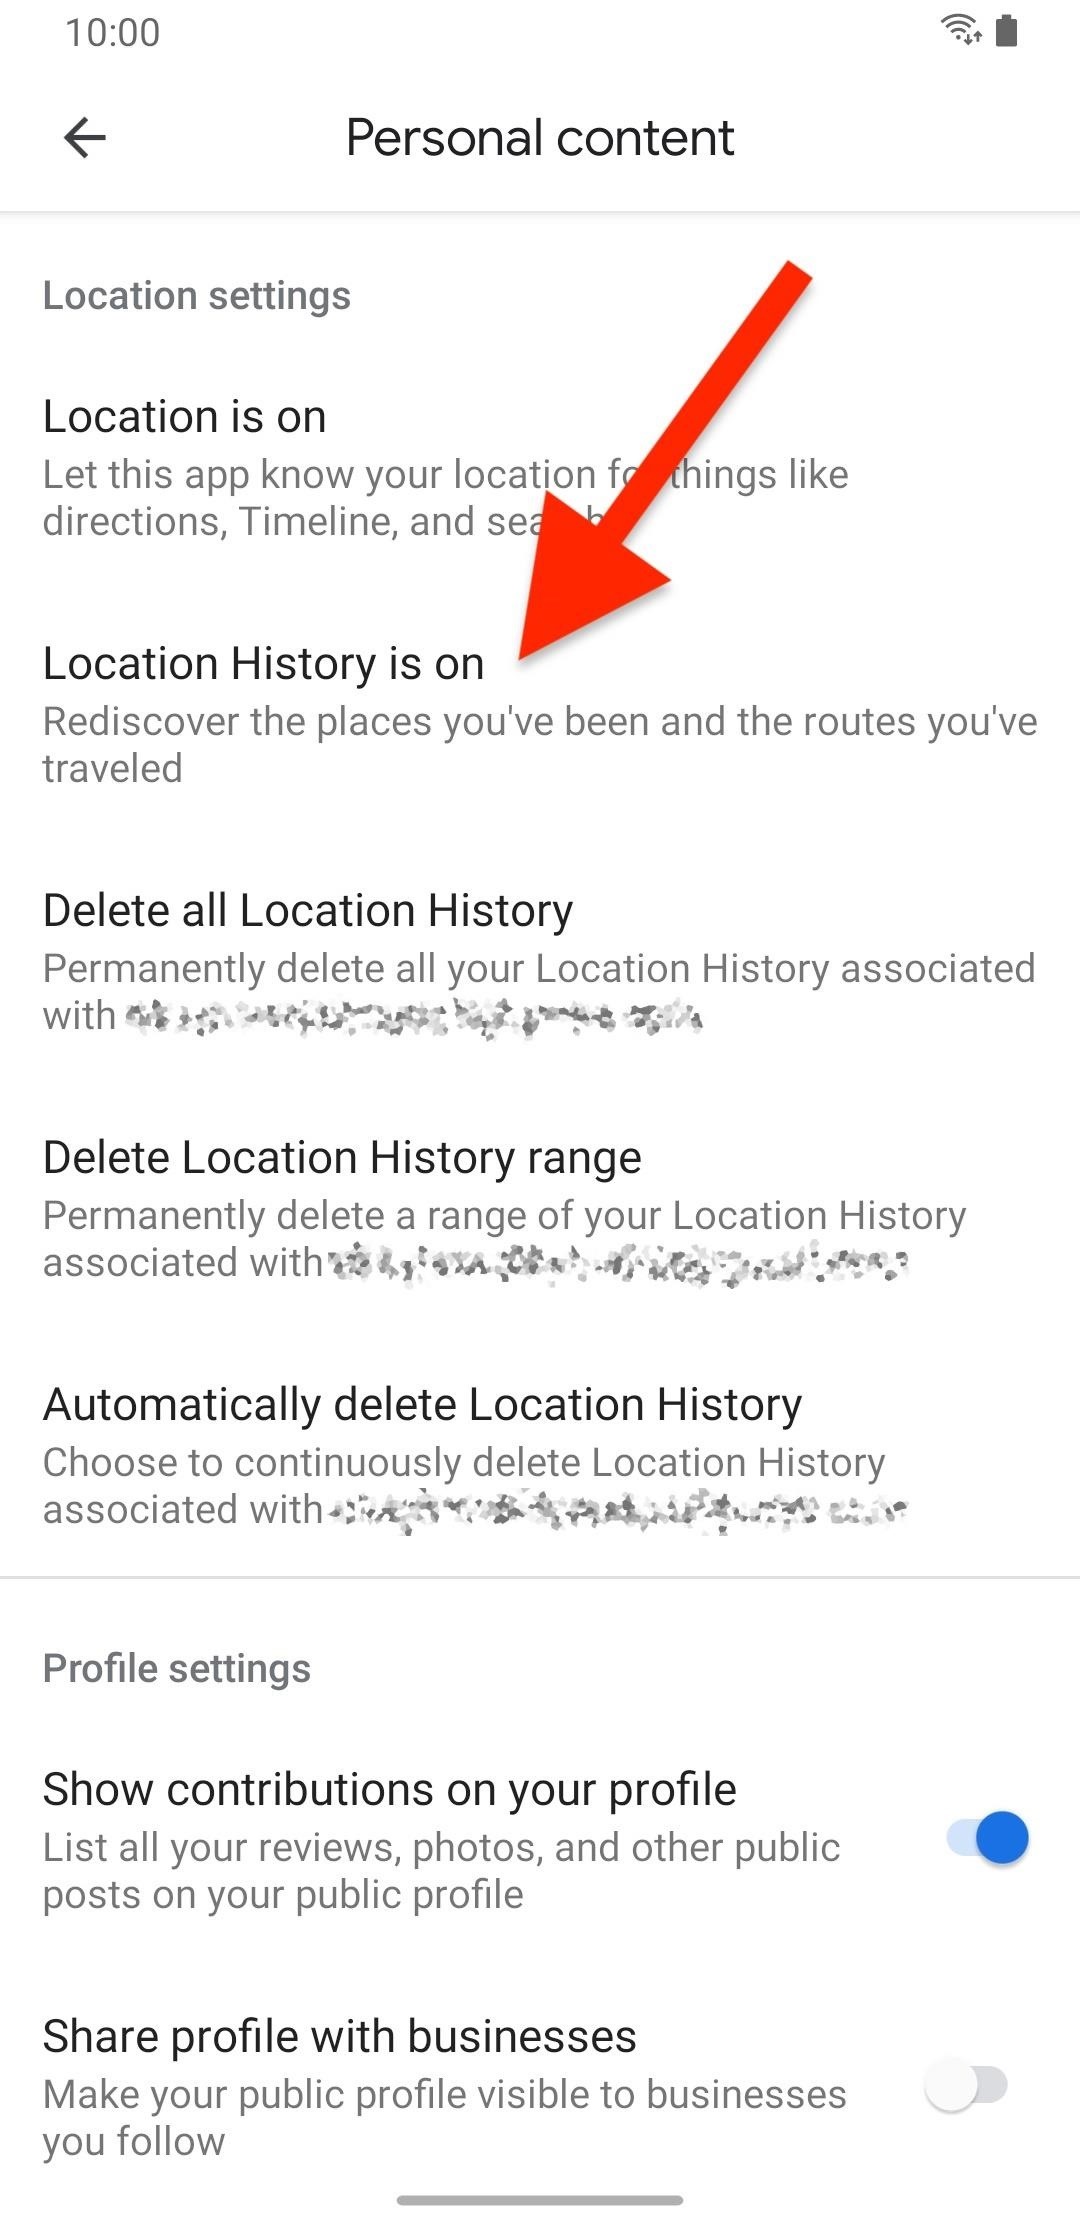 How do I permanently delete my location history?